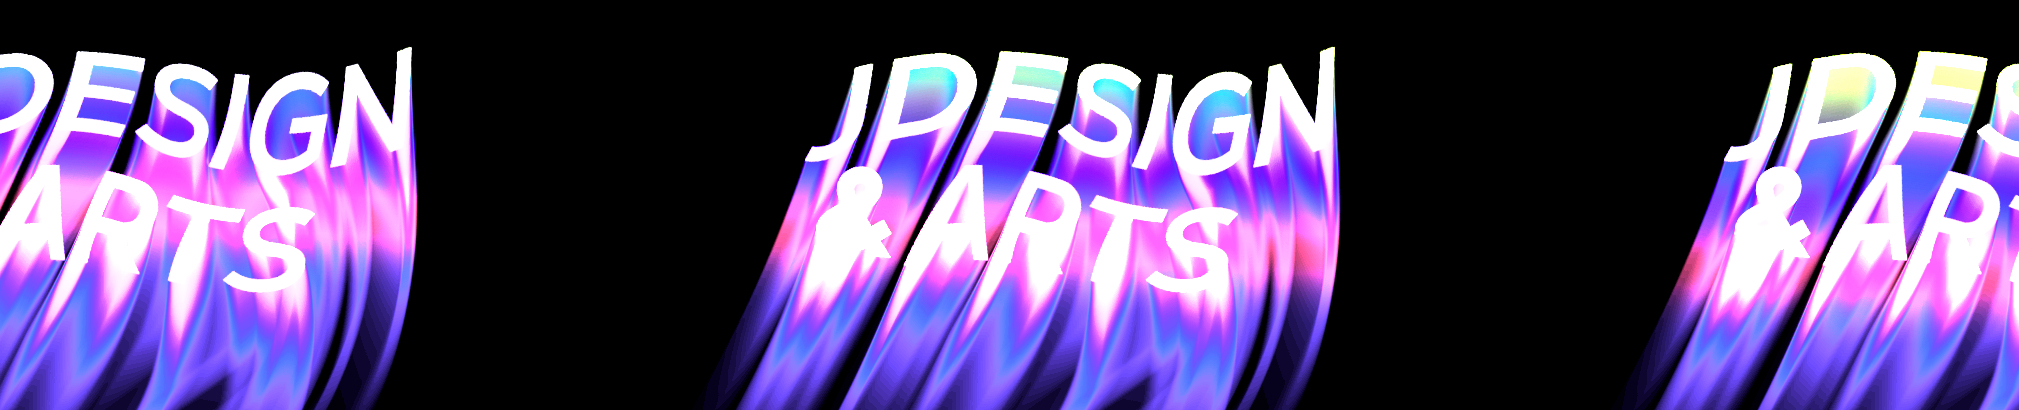 jdesign &arts's profile banner